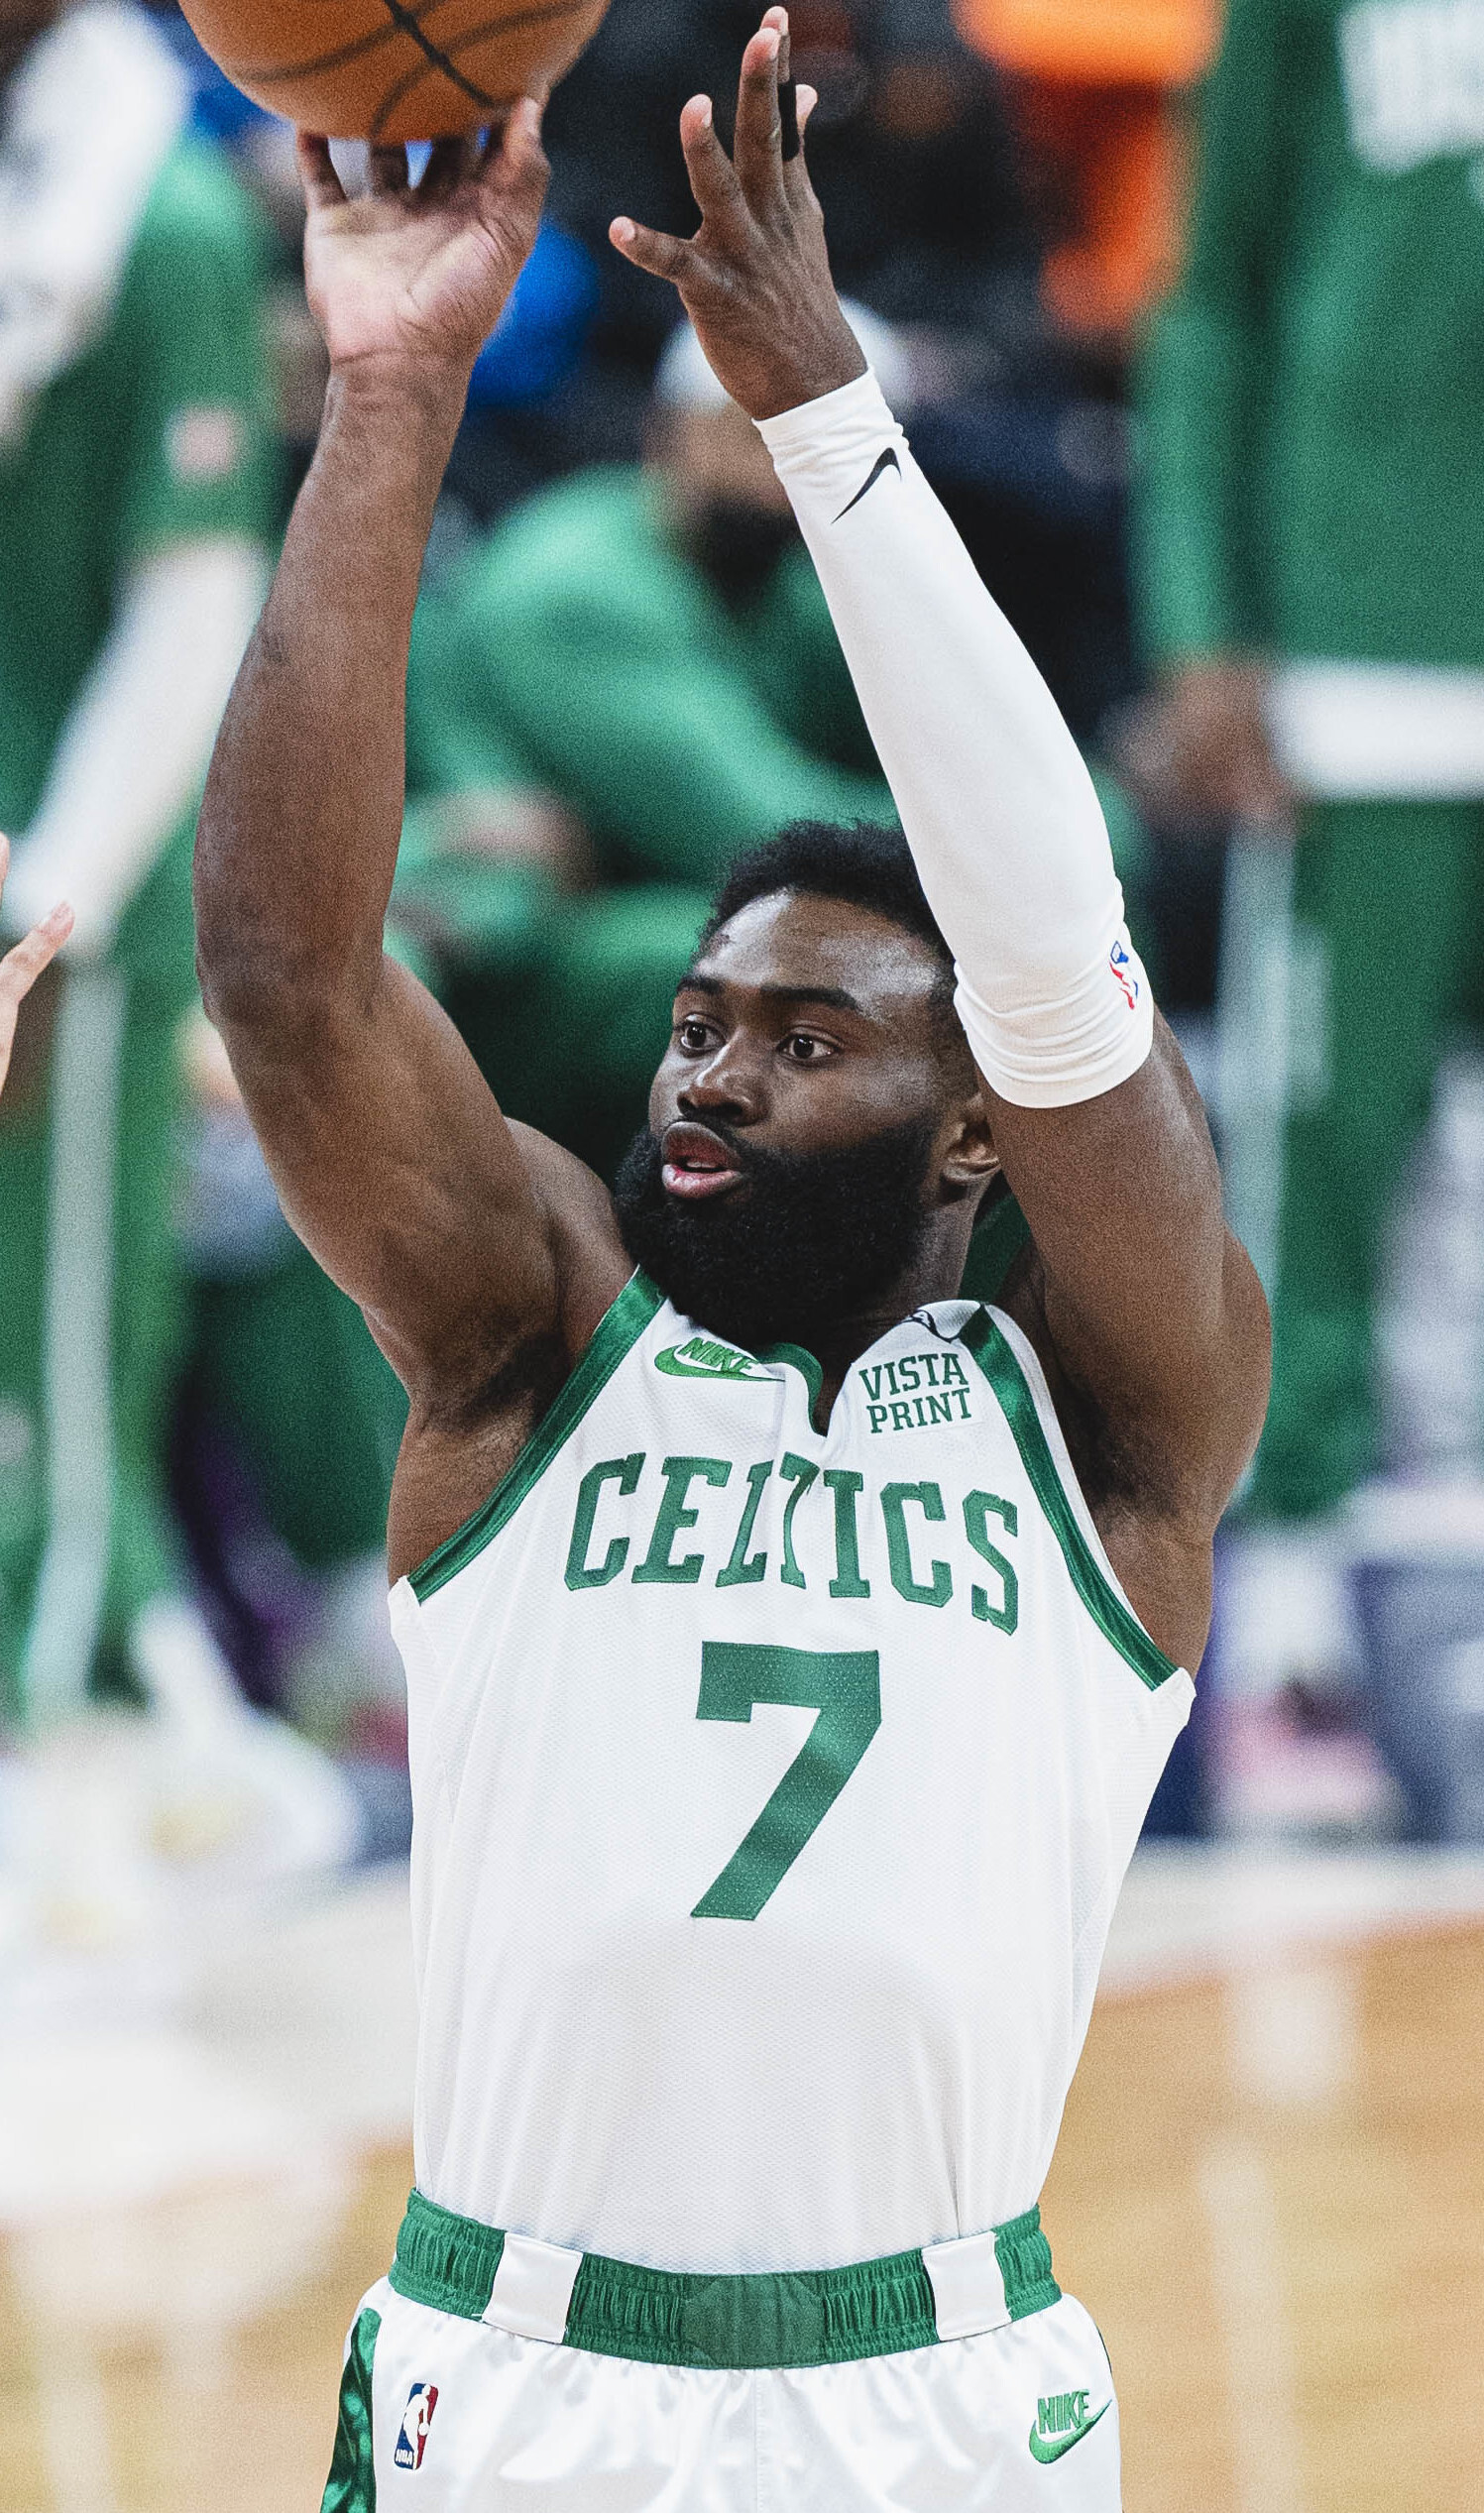 NBA's $300 million man, Jaylen Brown ready to step up for Celtics